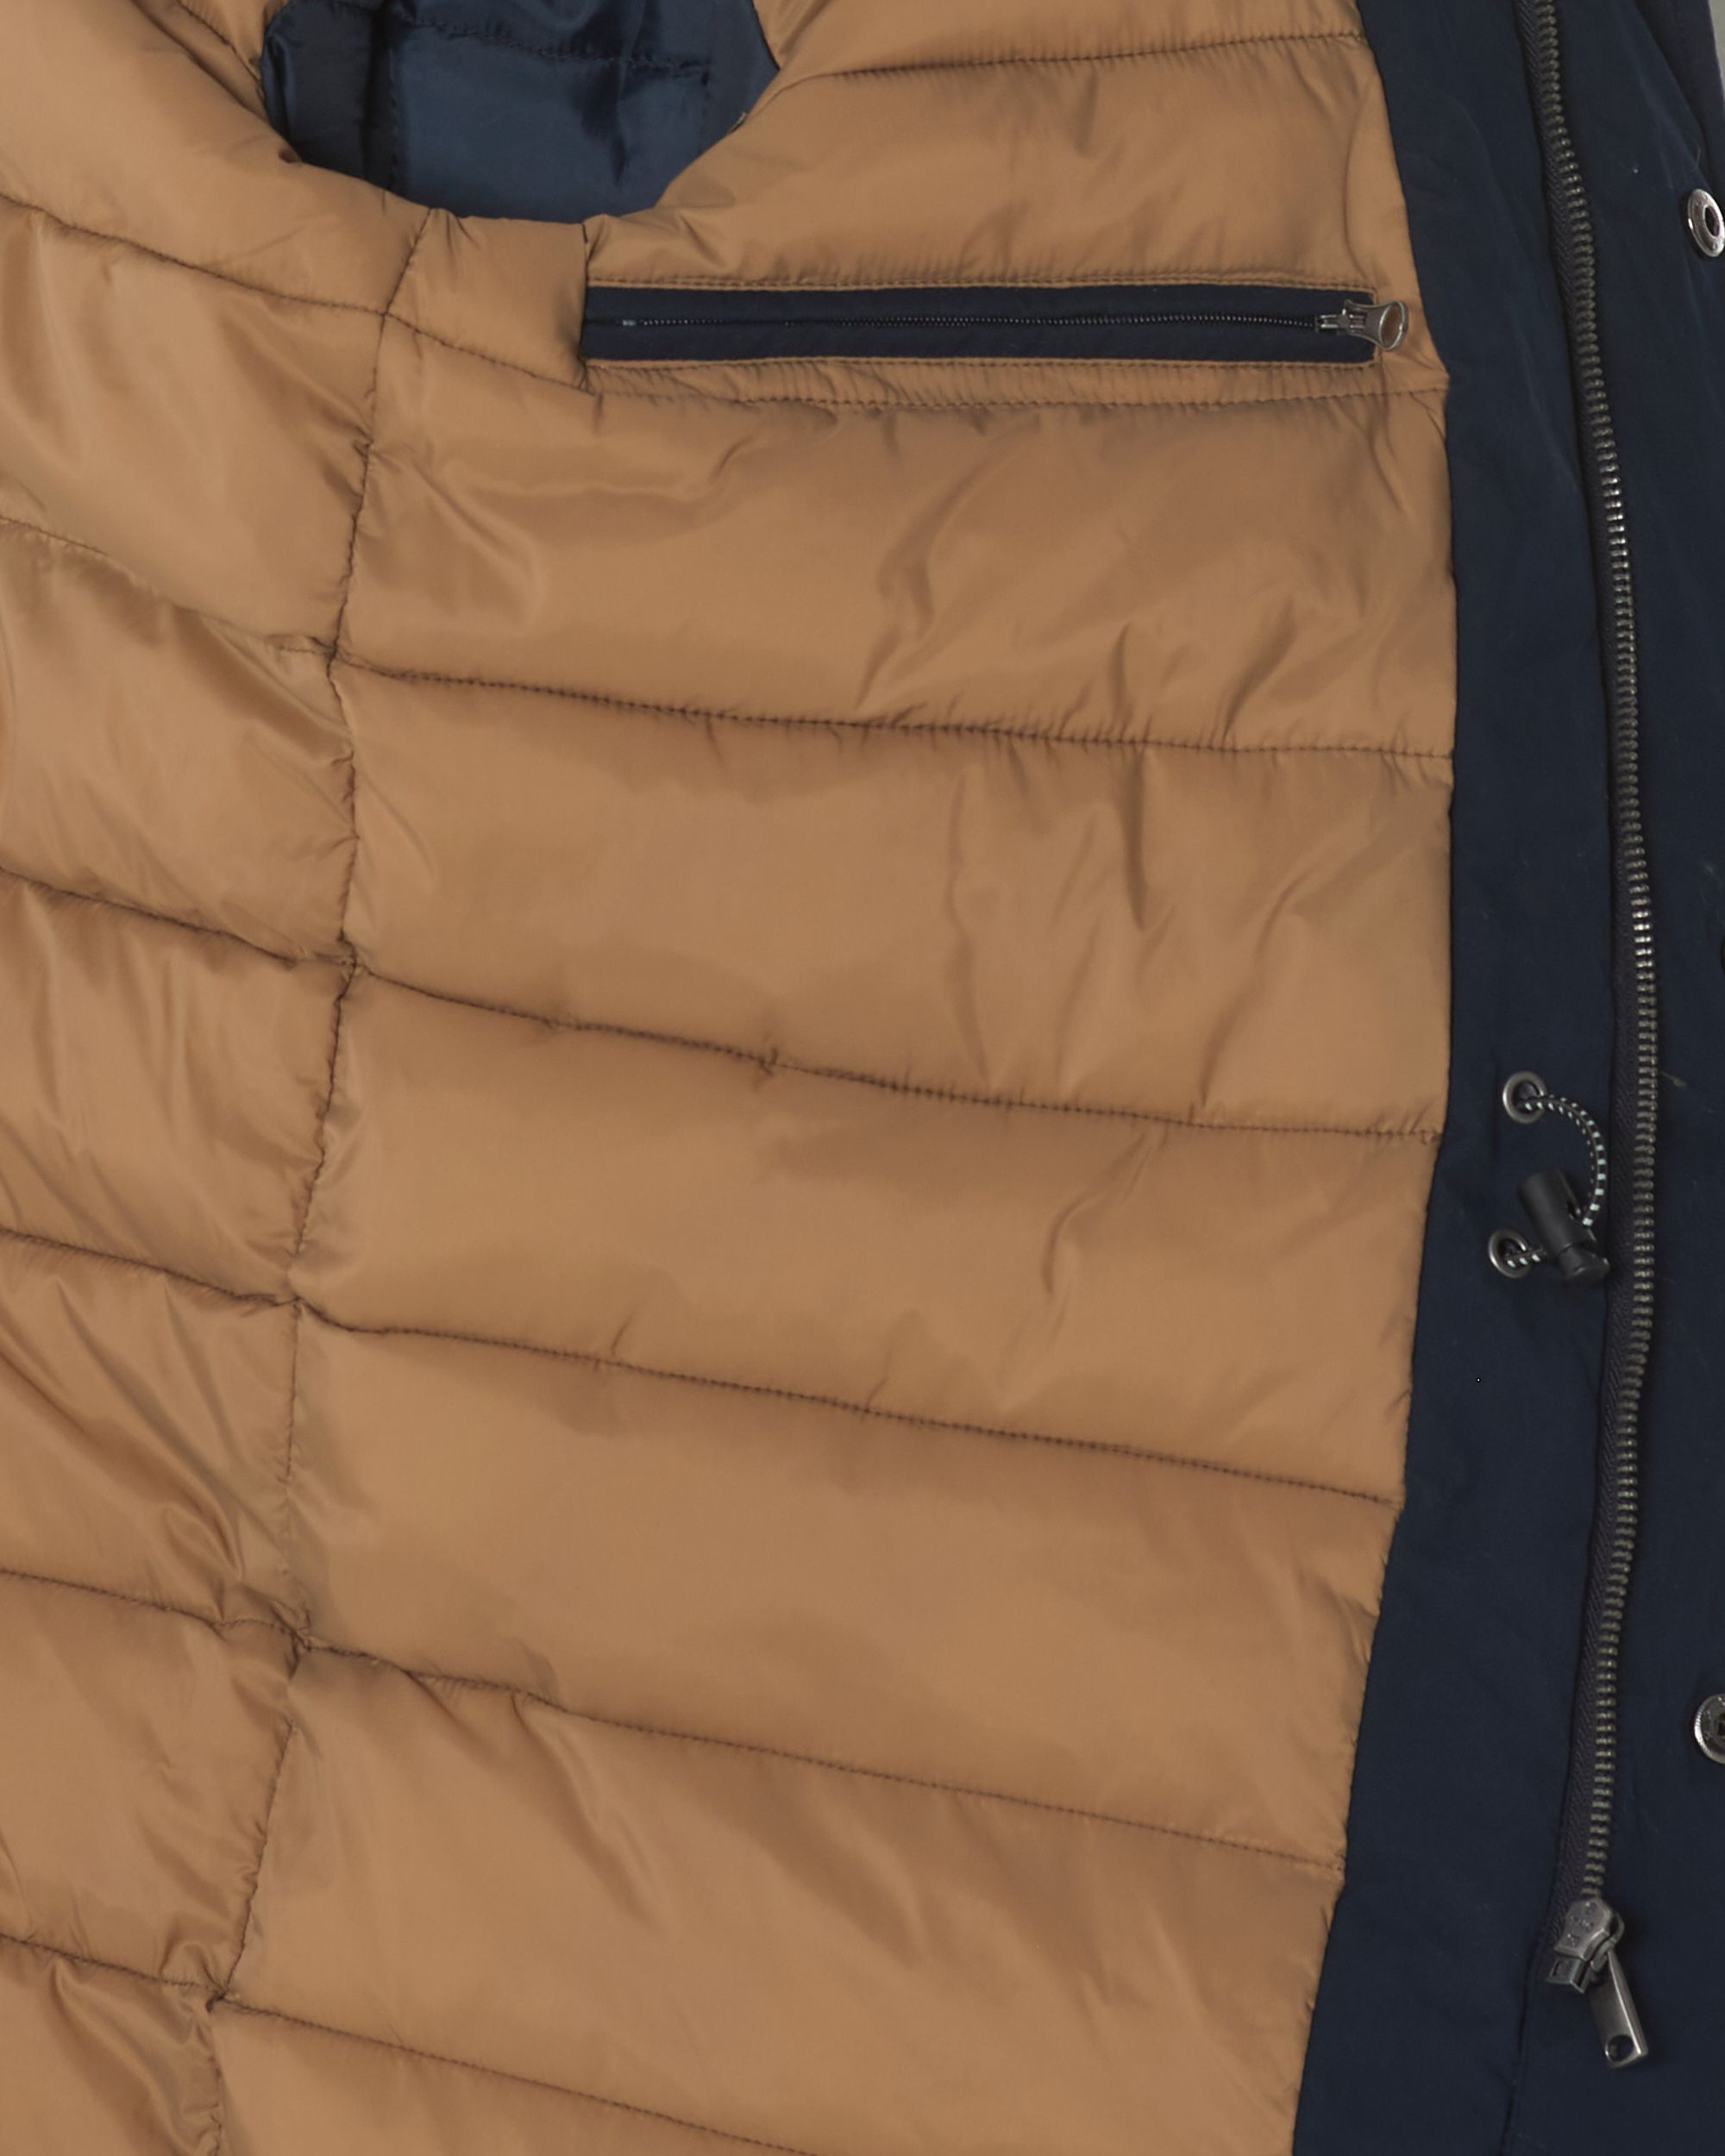 Campbell Classic Charleston Gewatteerde jas Donkerblauw uni 077551-002-L